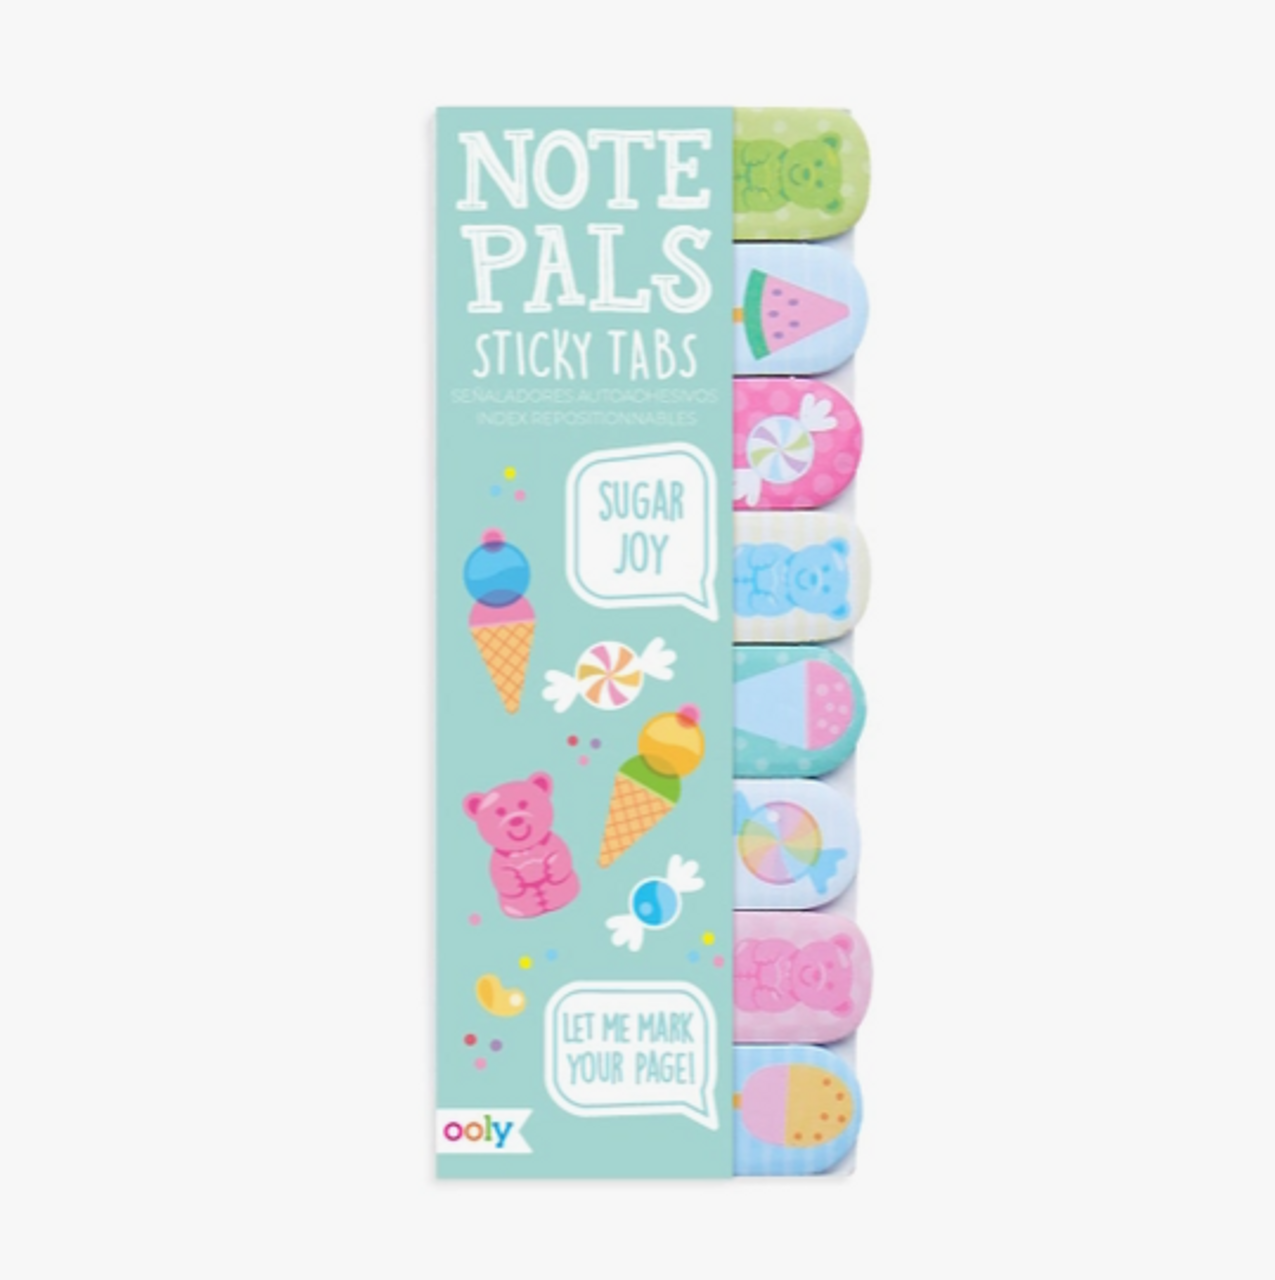 Note Pals Sticky Tabs - Sugar Joy